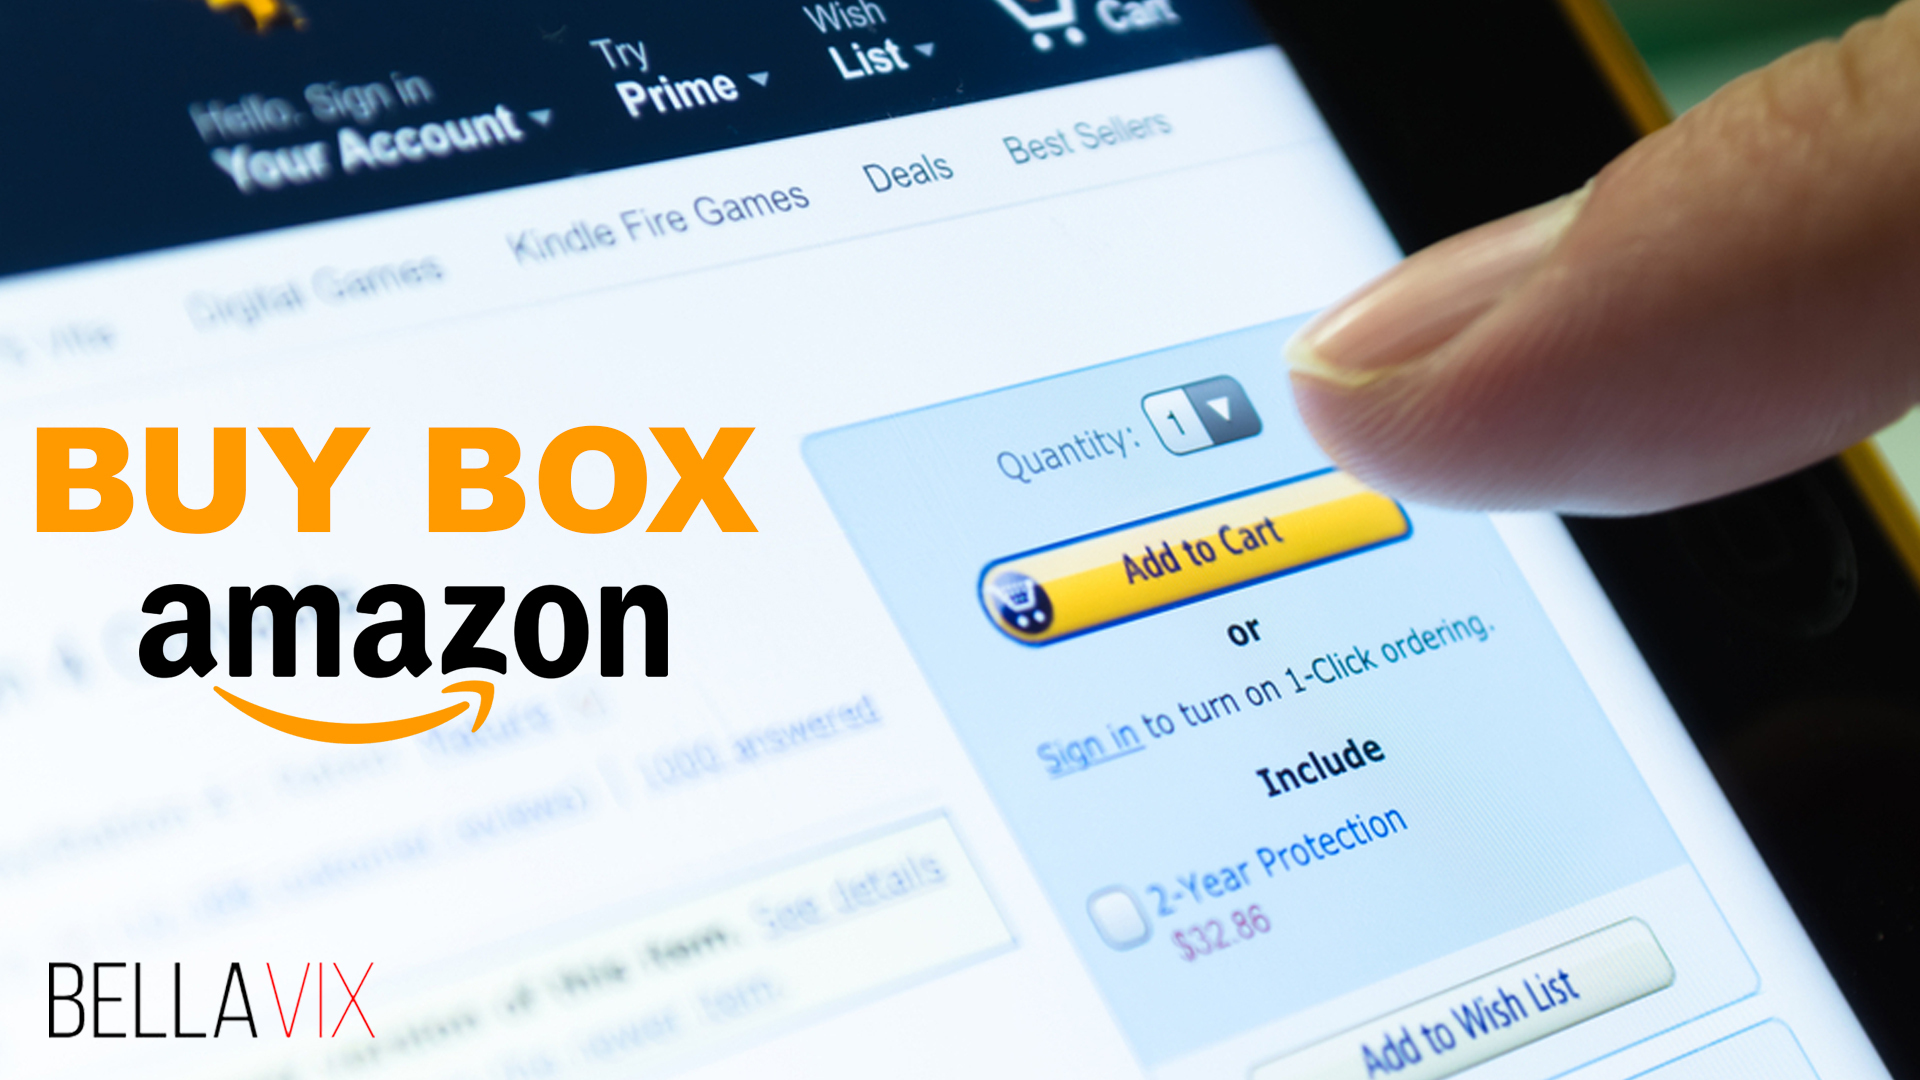 How to Check Buy Box Eligibility on Amazon? • Inchoo